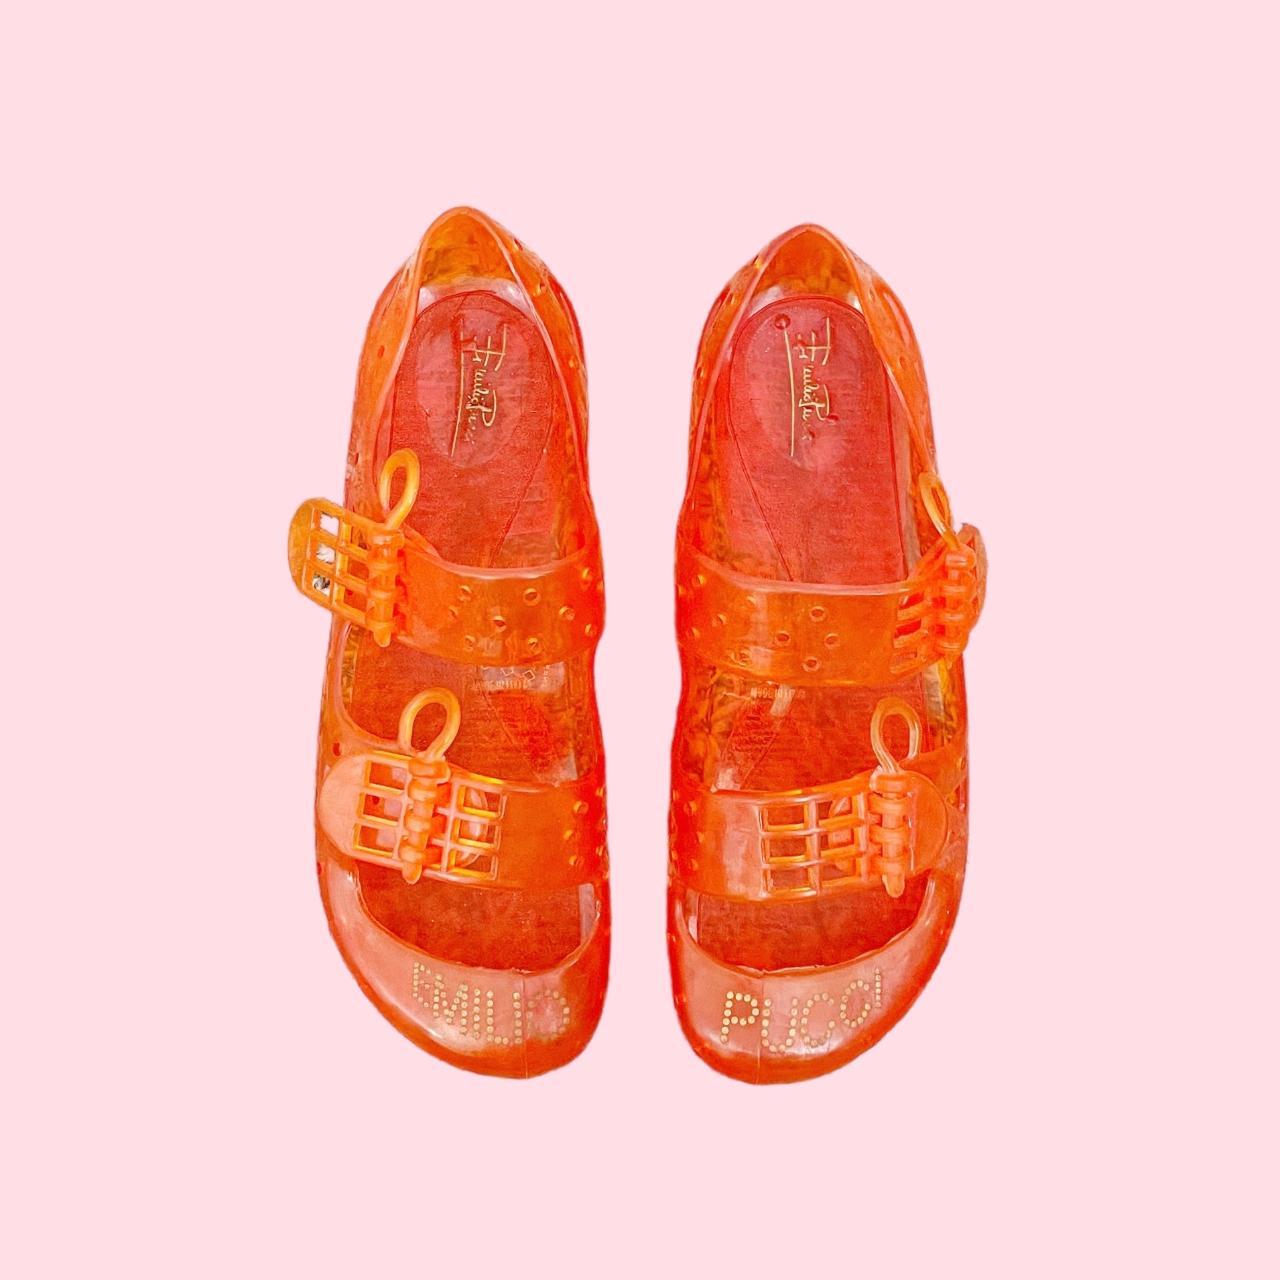 Emilio Pucci Women's Orange and Gold Footwear